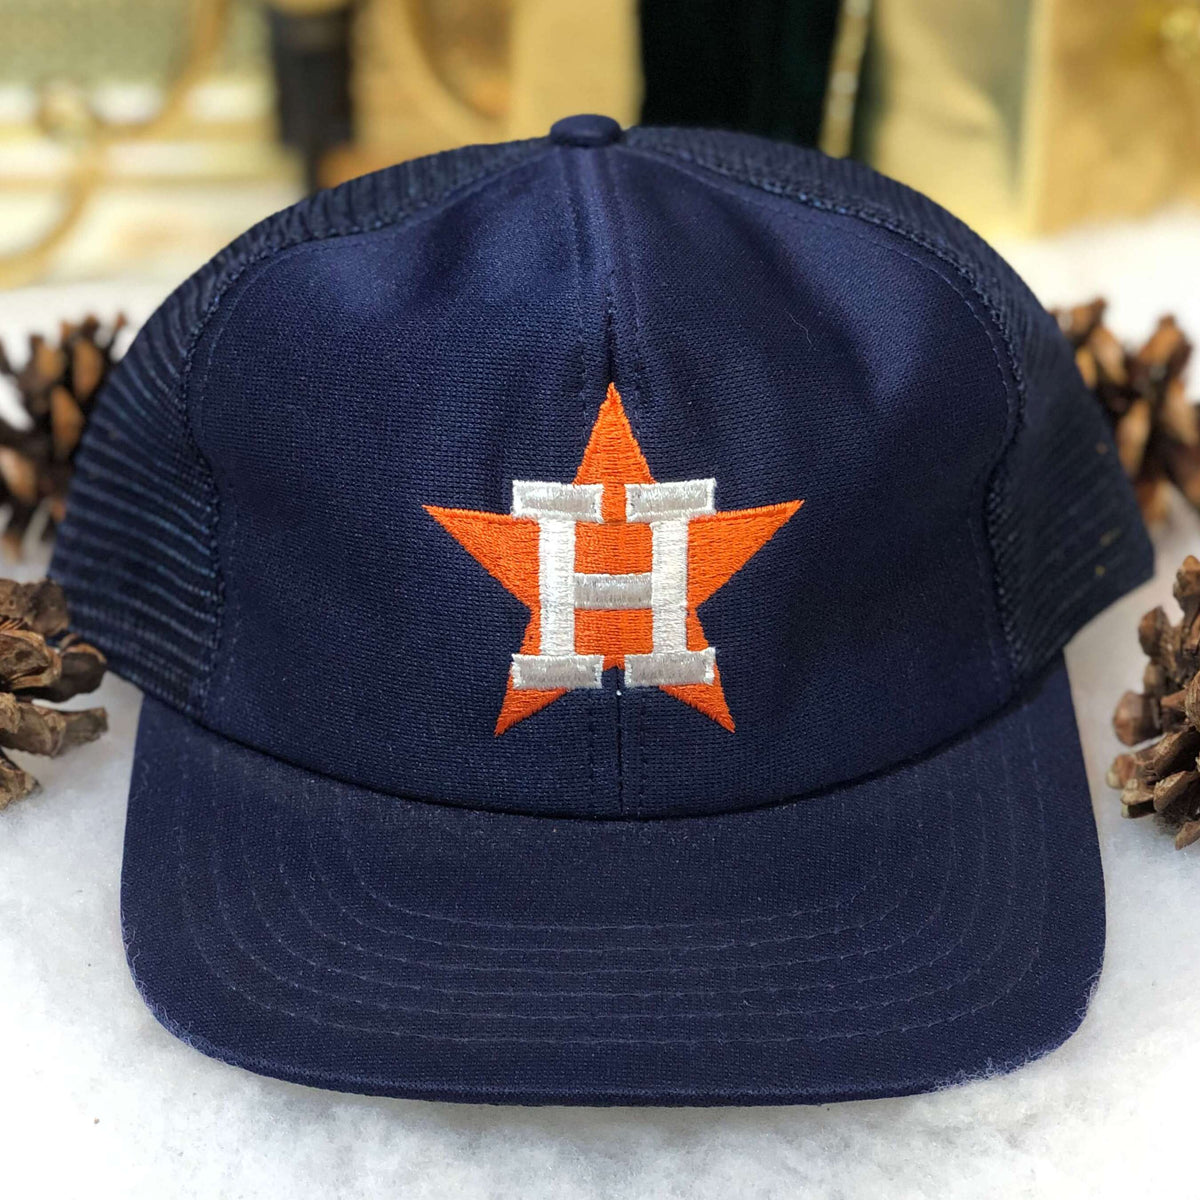 Astros Baseball Vintage Trucker Hat